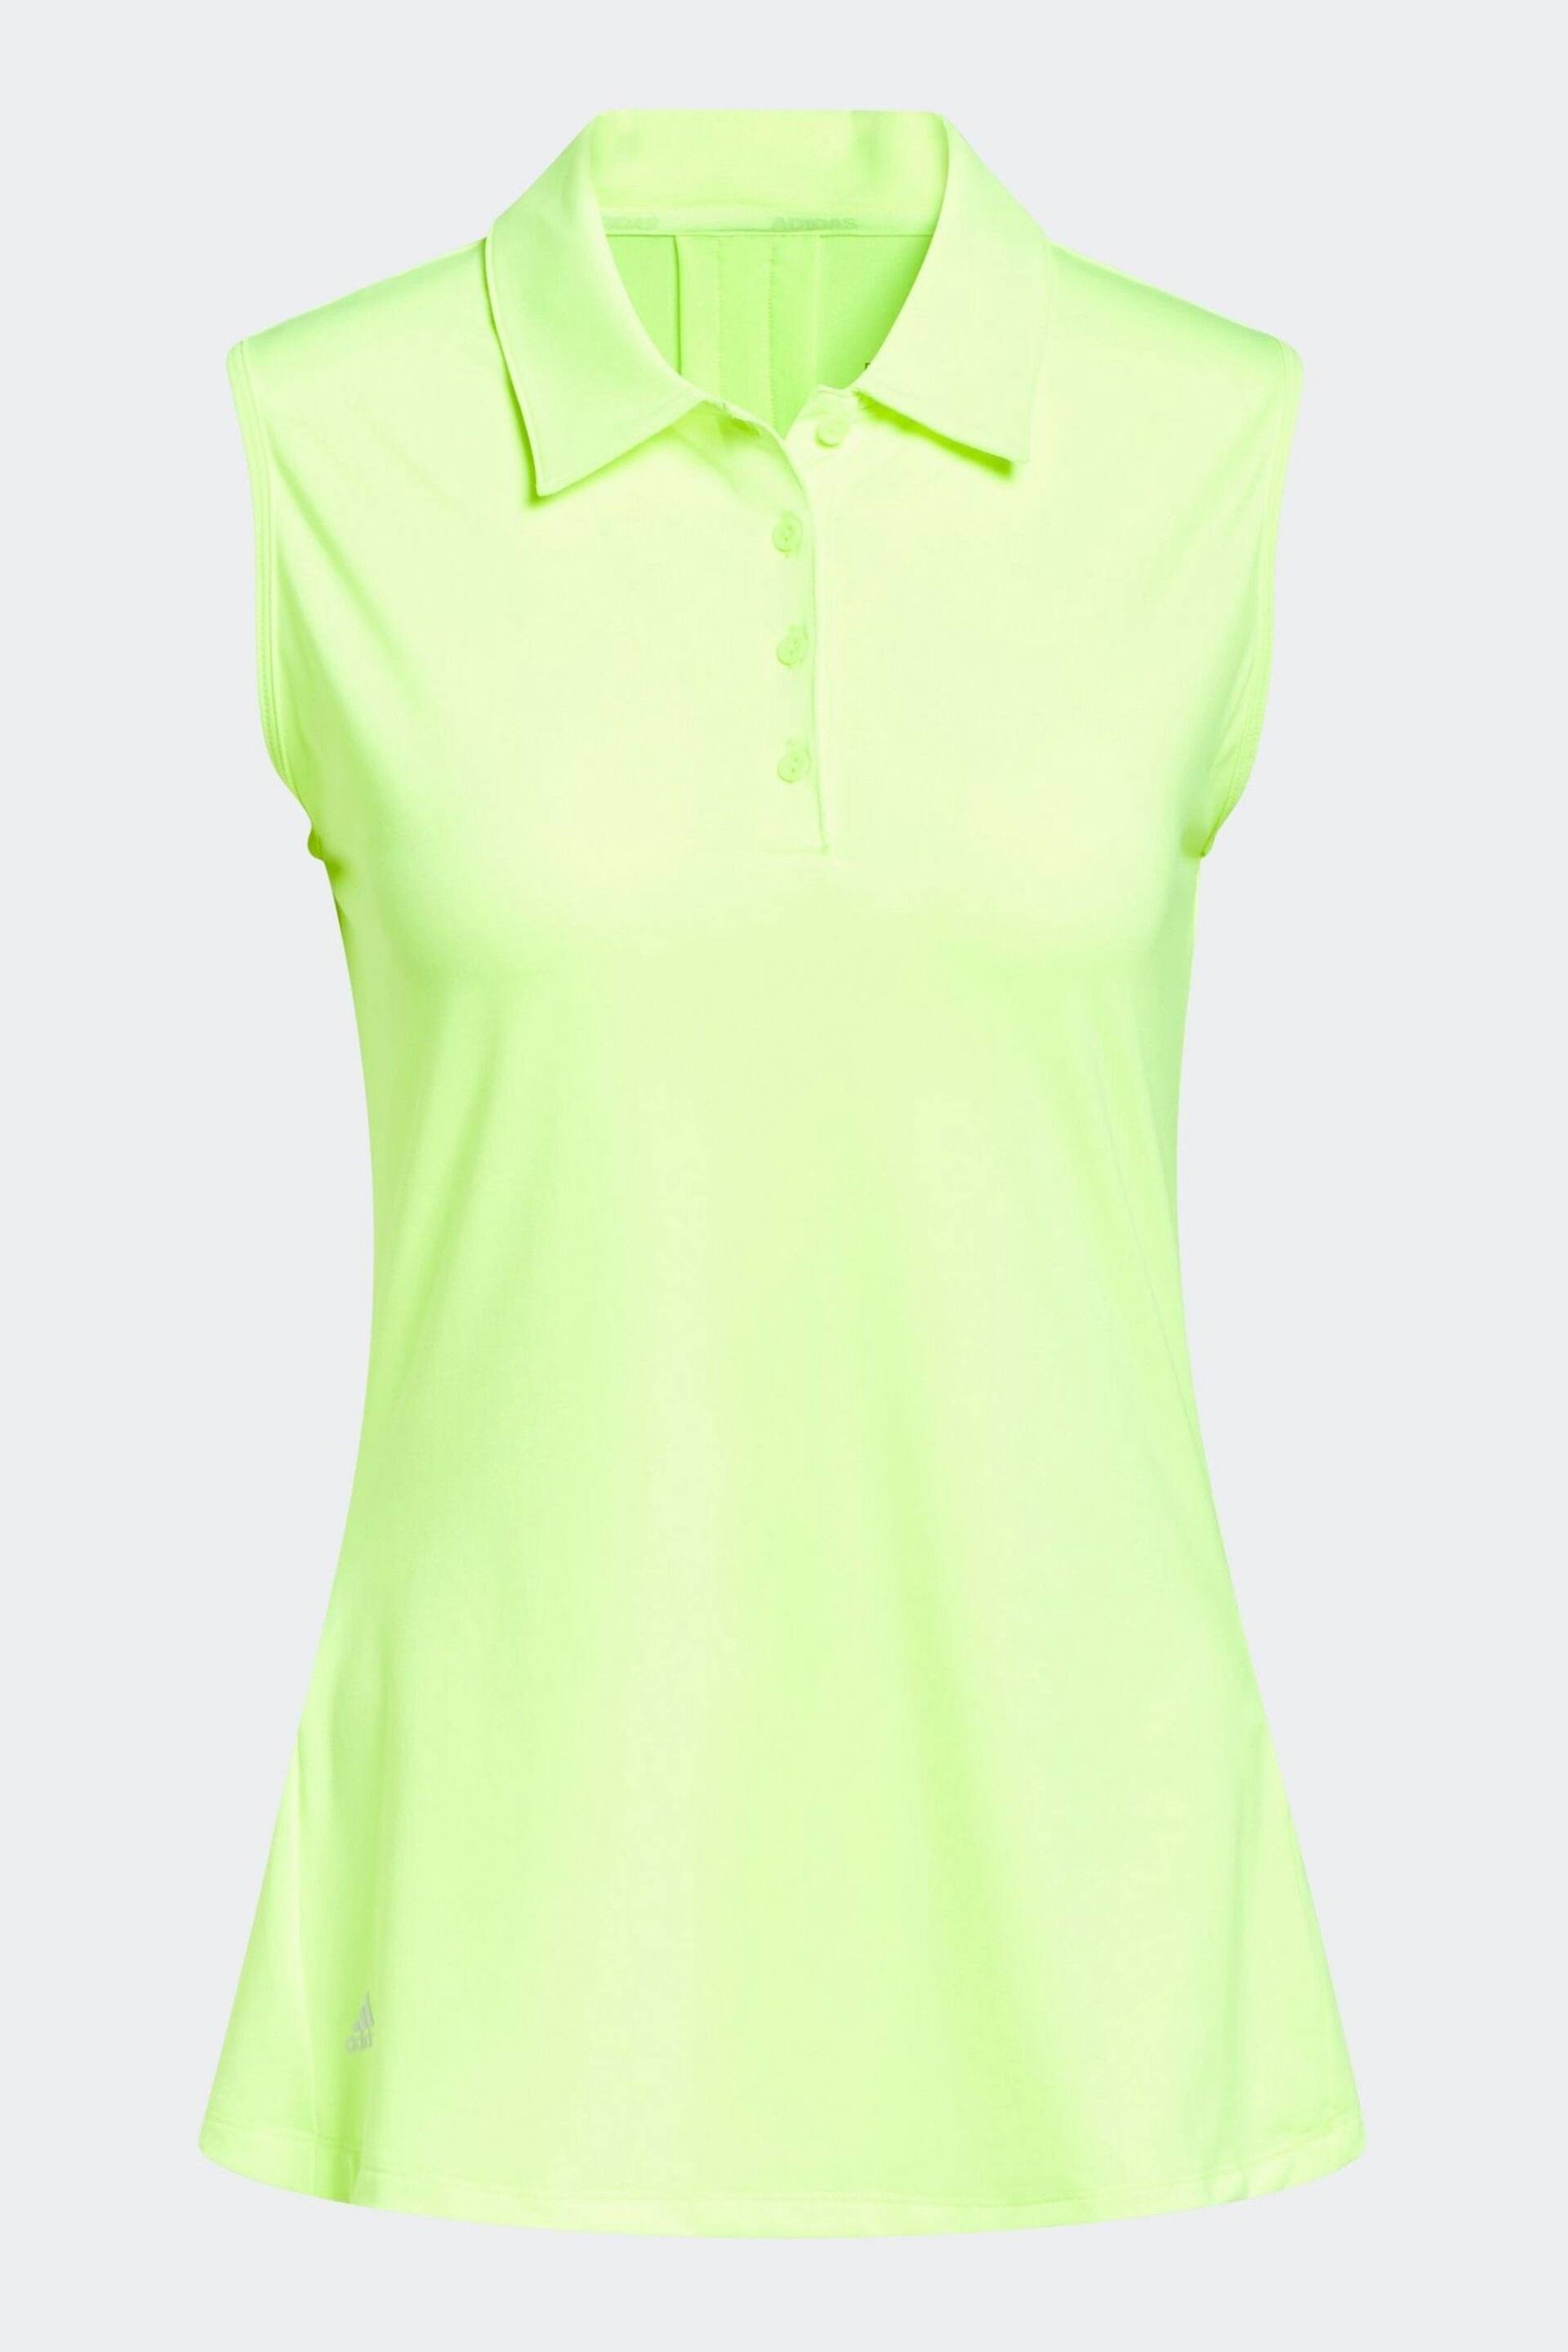 adidas Golf Ultimate 365 Solid Sleeveless Polo Shirt - Image 7 of 7